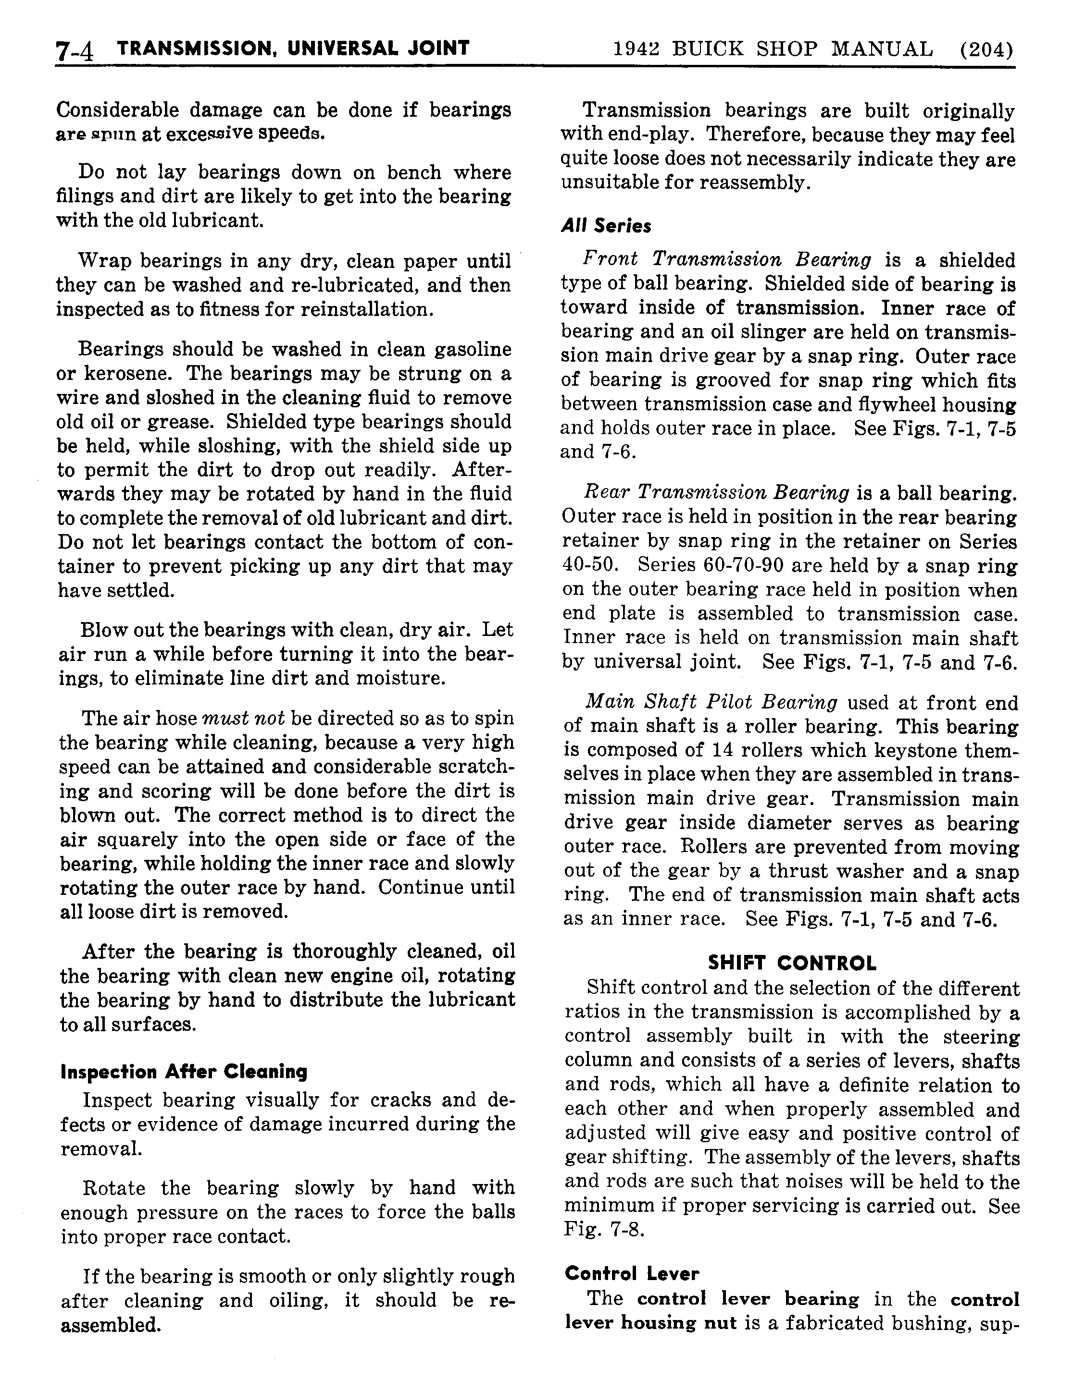 n_08 1942 Buick Shop Manual - Transmission-004-004.jpg